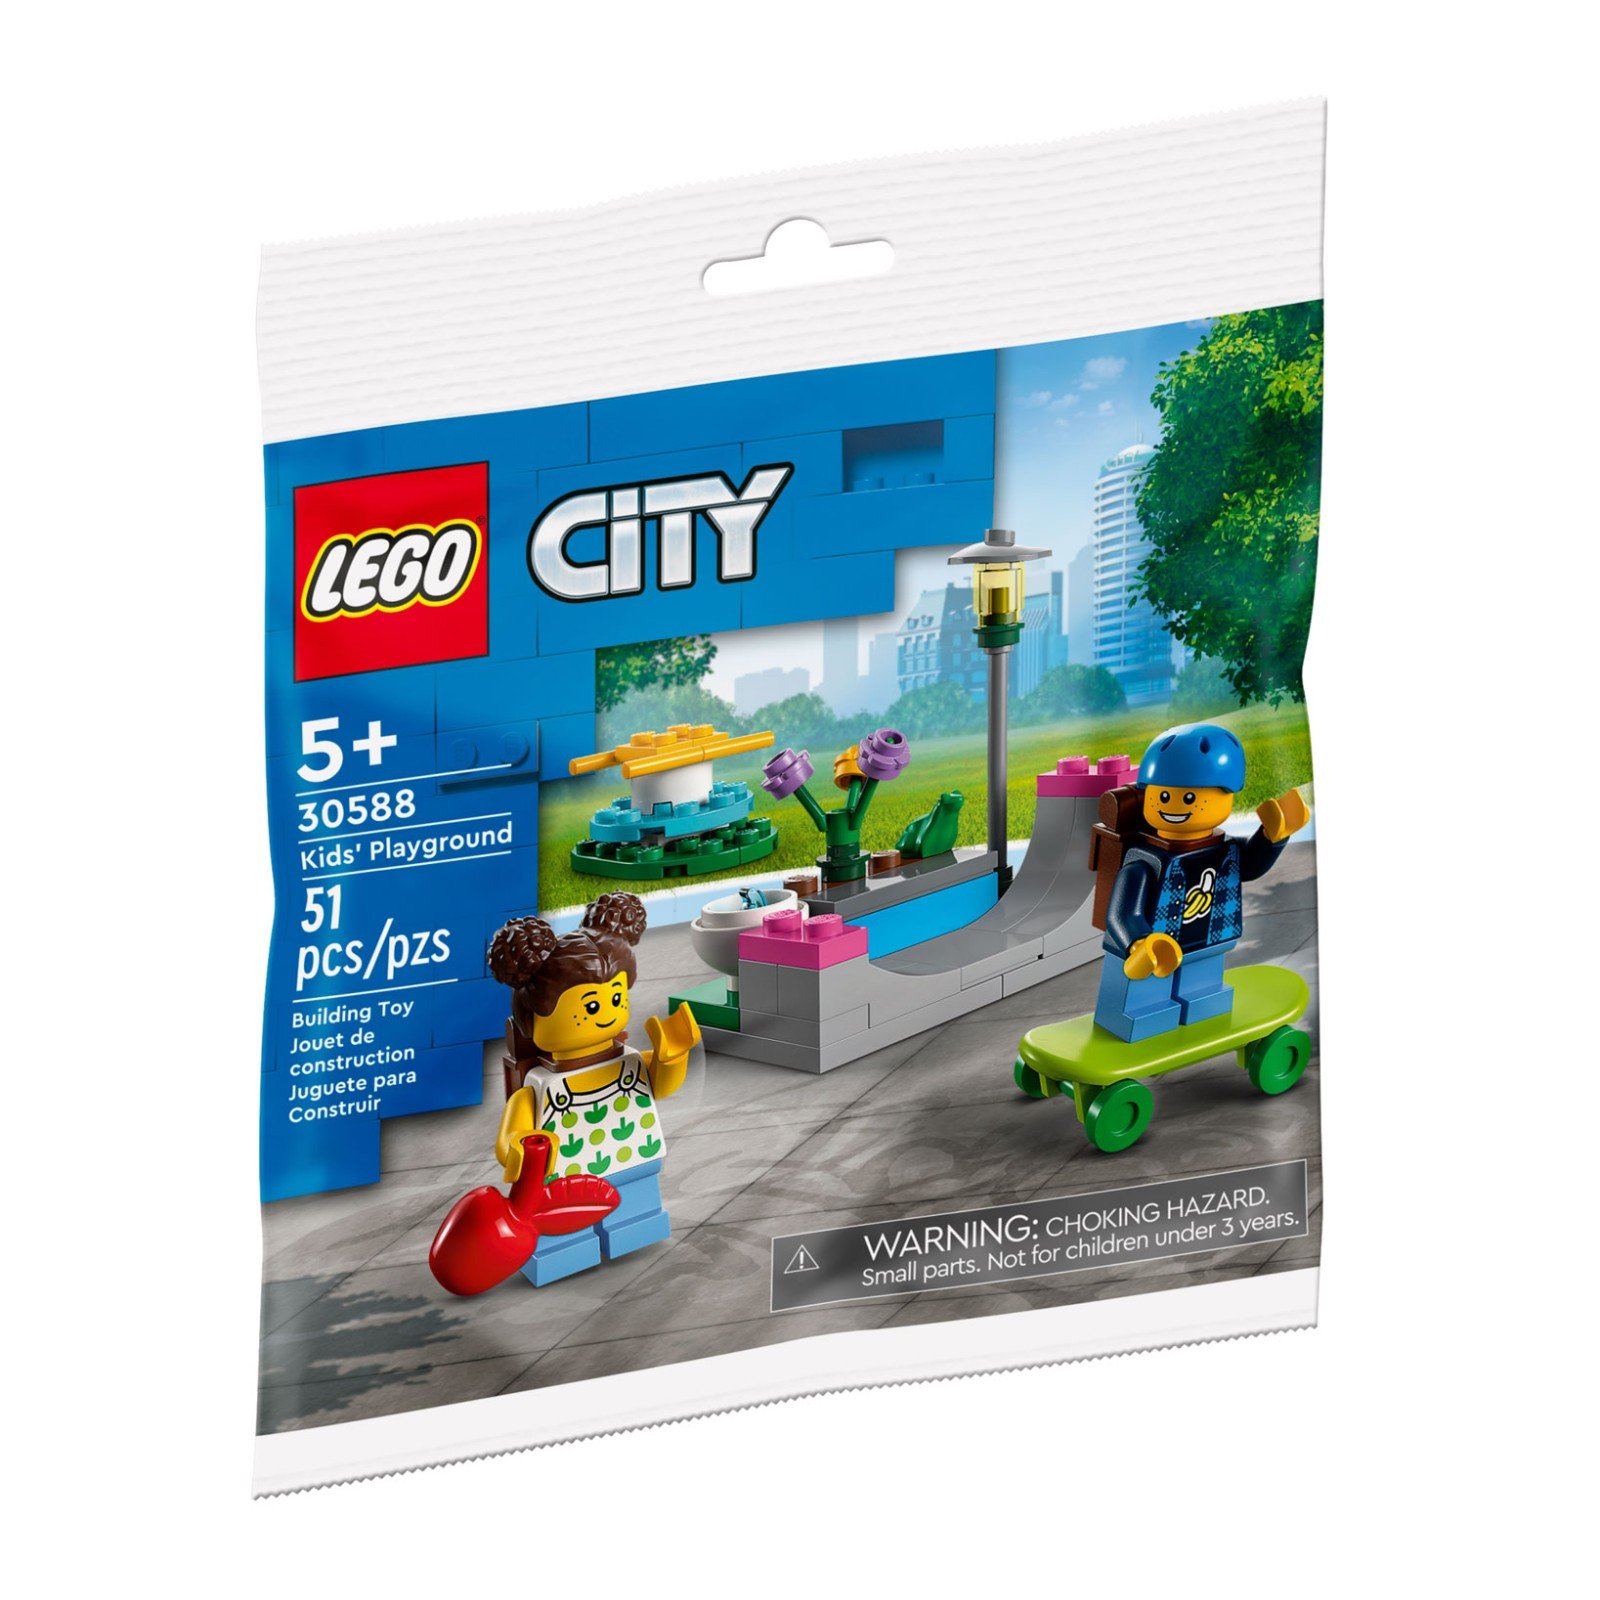 Kids' Playground - Polybag LEGO® City 30588 - Super Briques